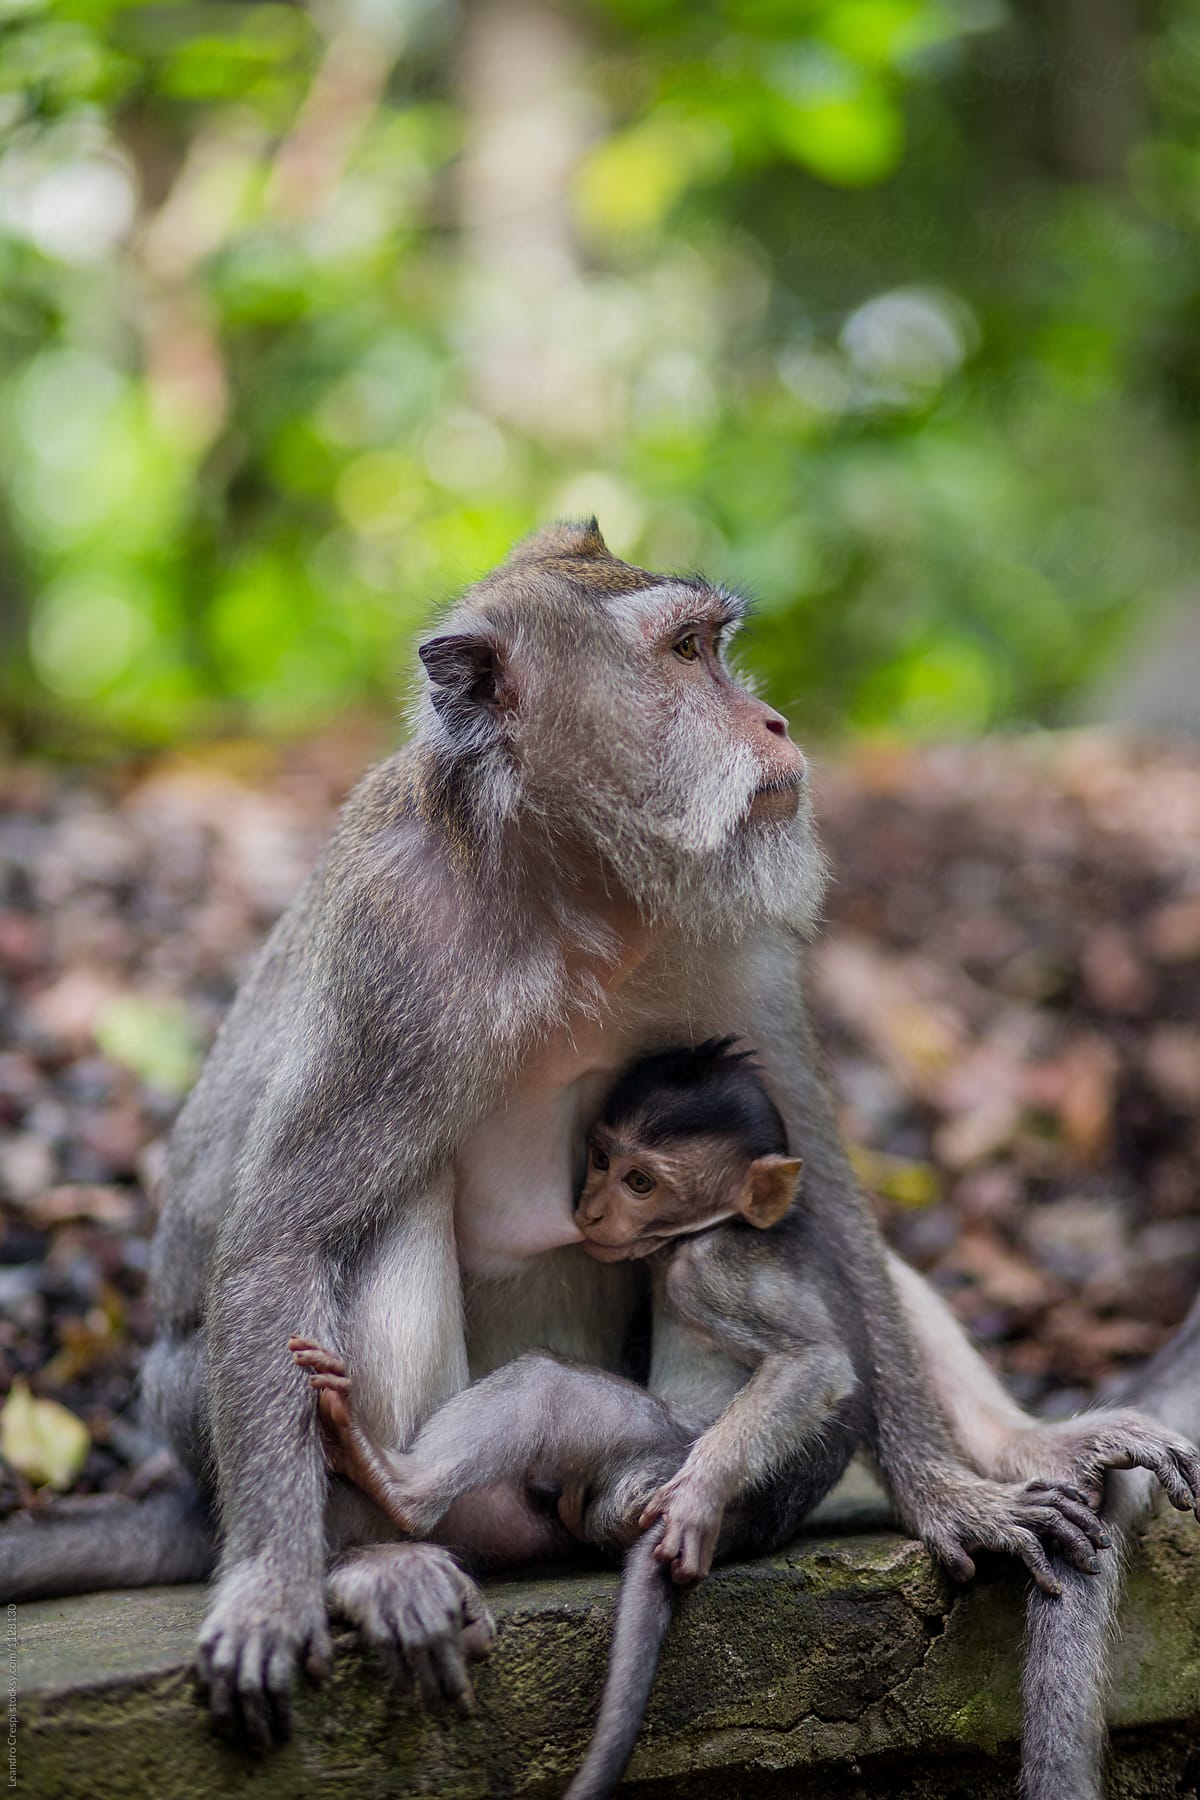 Monkey forest, Bali Indonesia